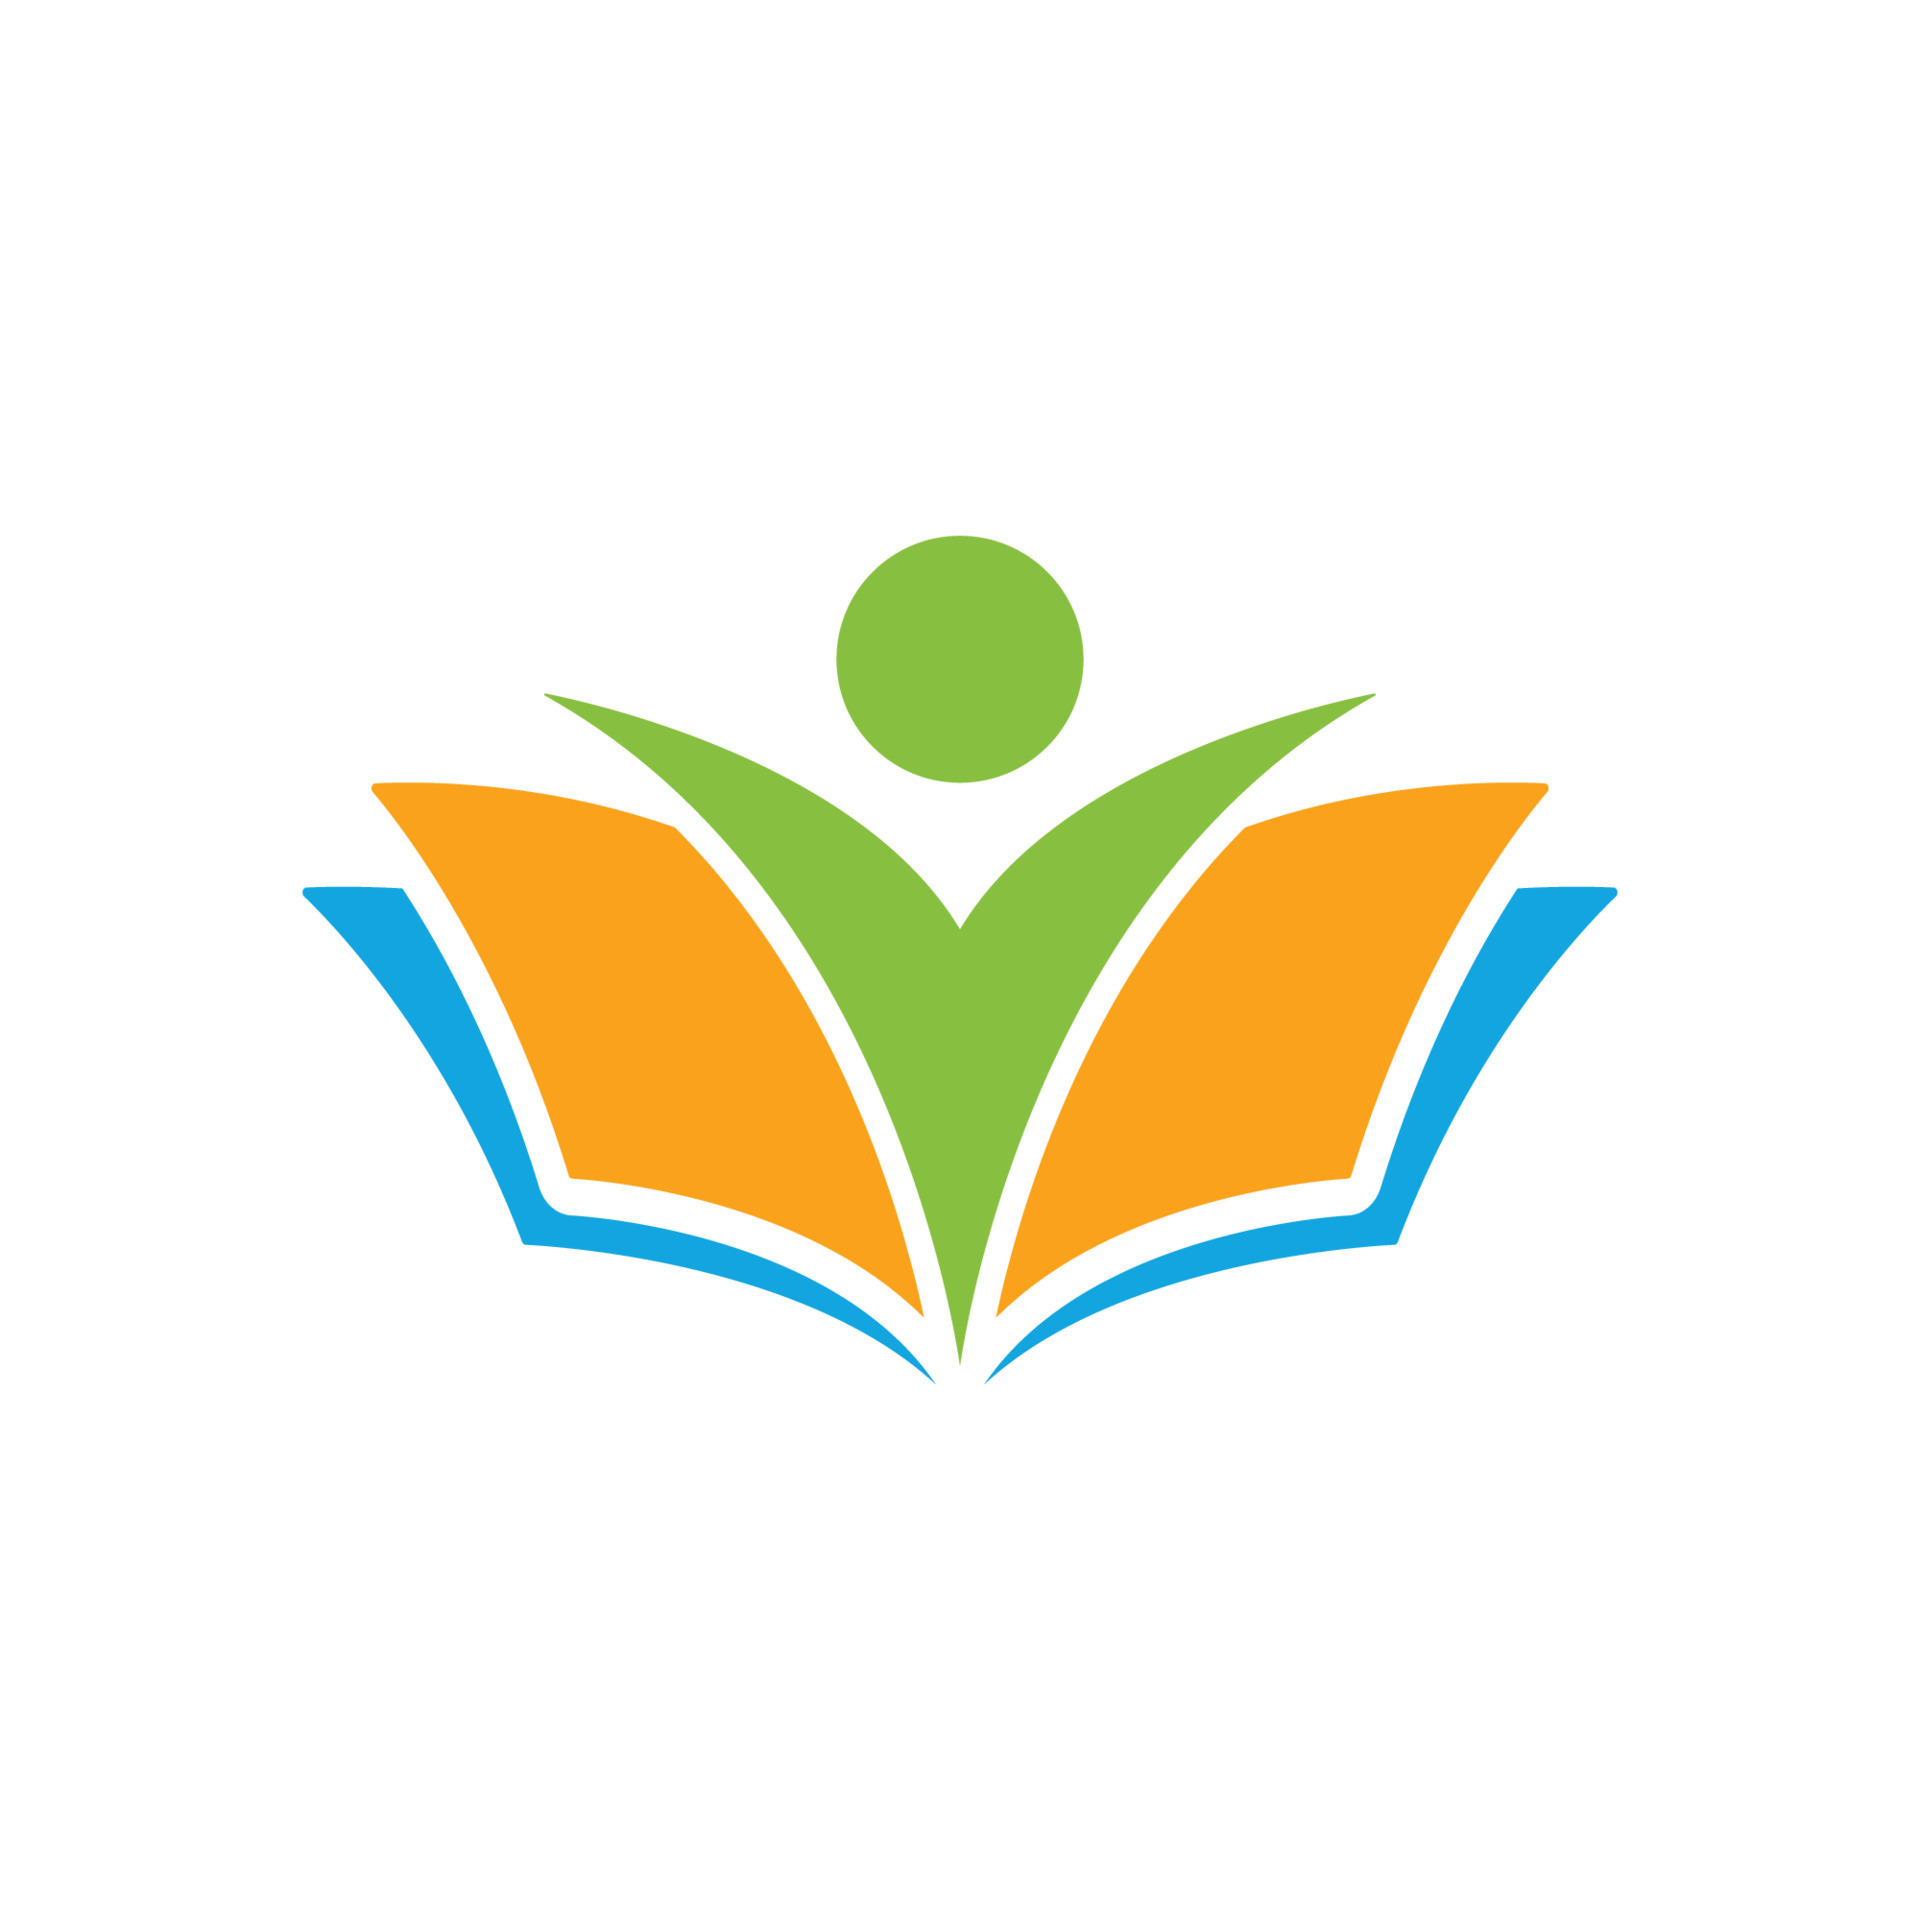 Sample School Logo Designs